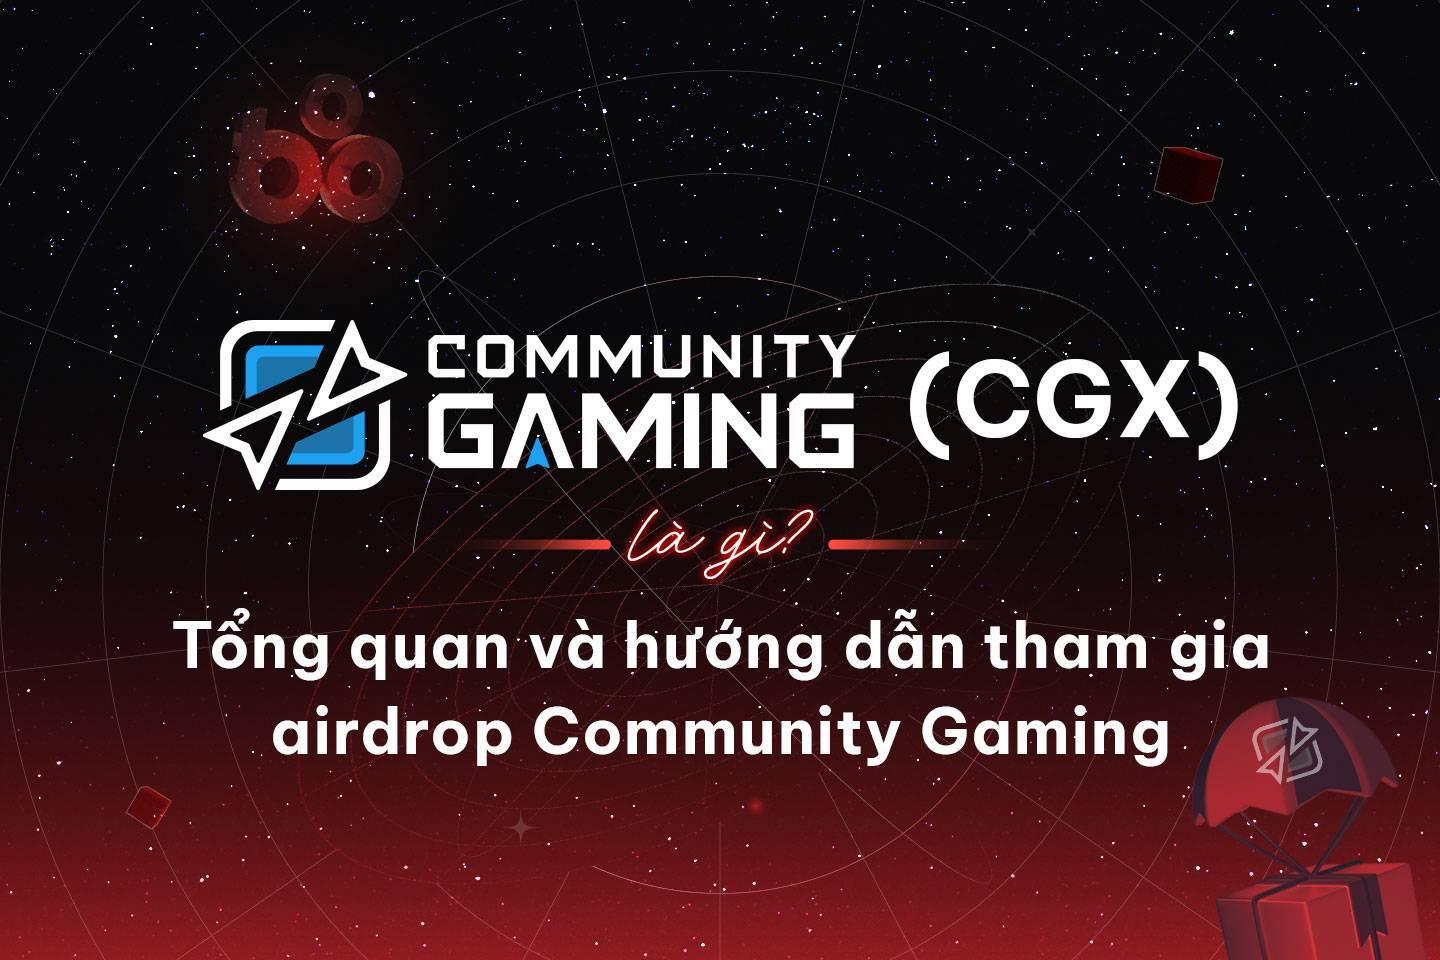 community-gaming-cgx-la-gi-tong-quan-va-huong-dan-tham-gia-airdrop-community-gaming